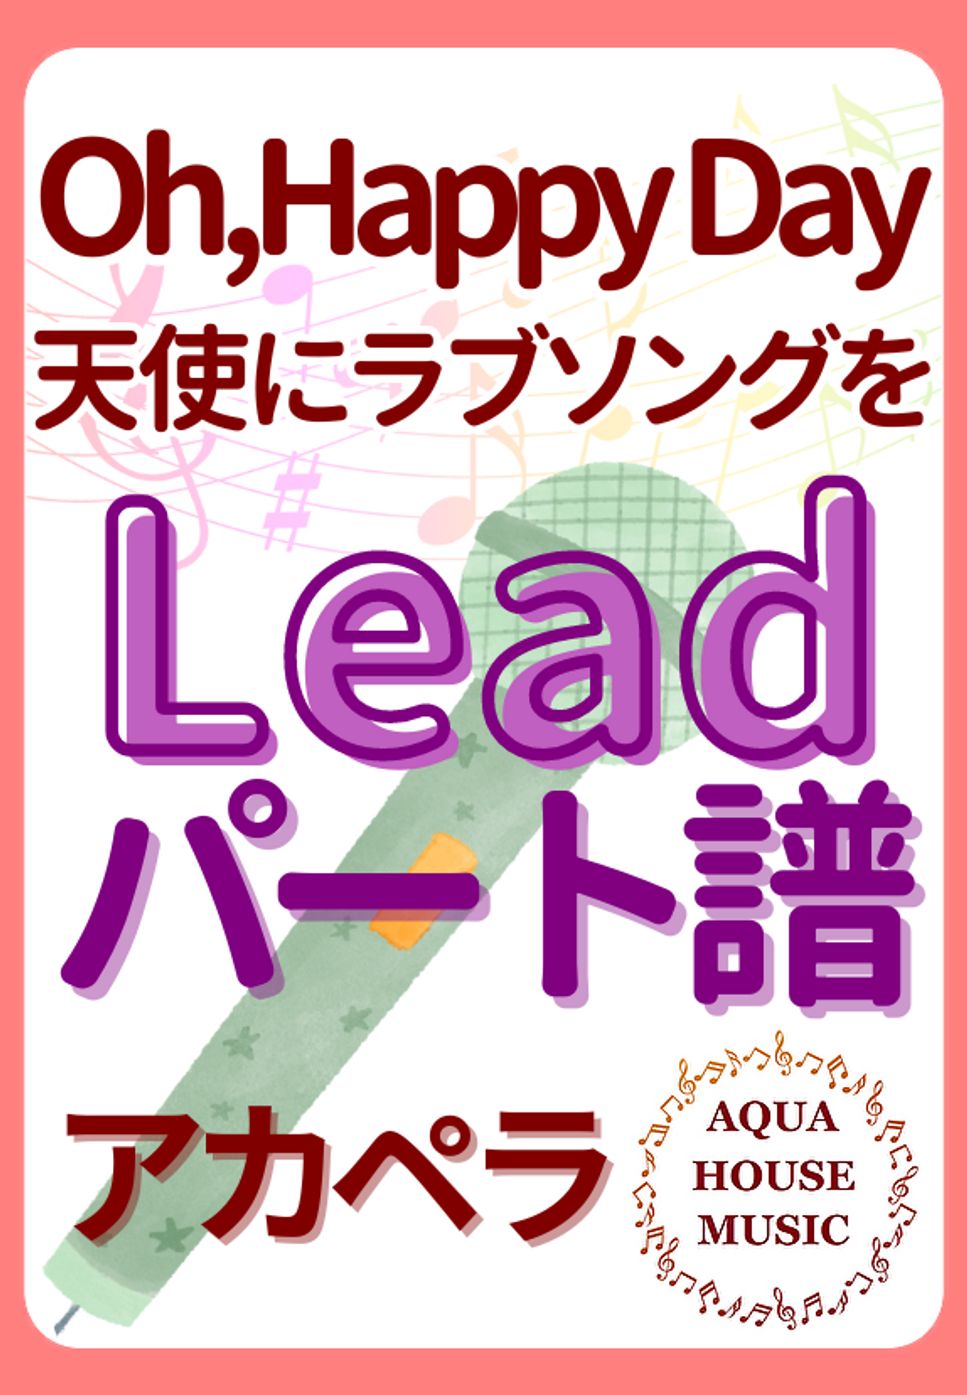 Oh, Happy Day (アカペラ楽譜♪Leadパート譜) by 飯田 亜紗子